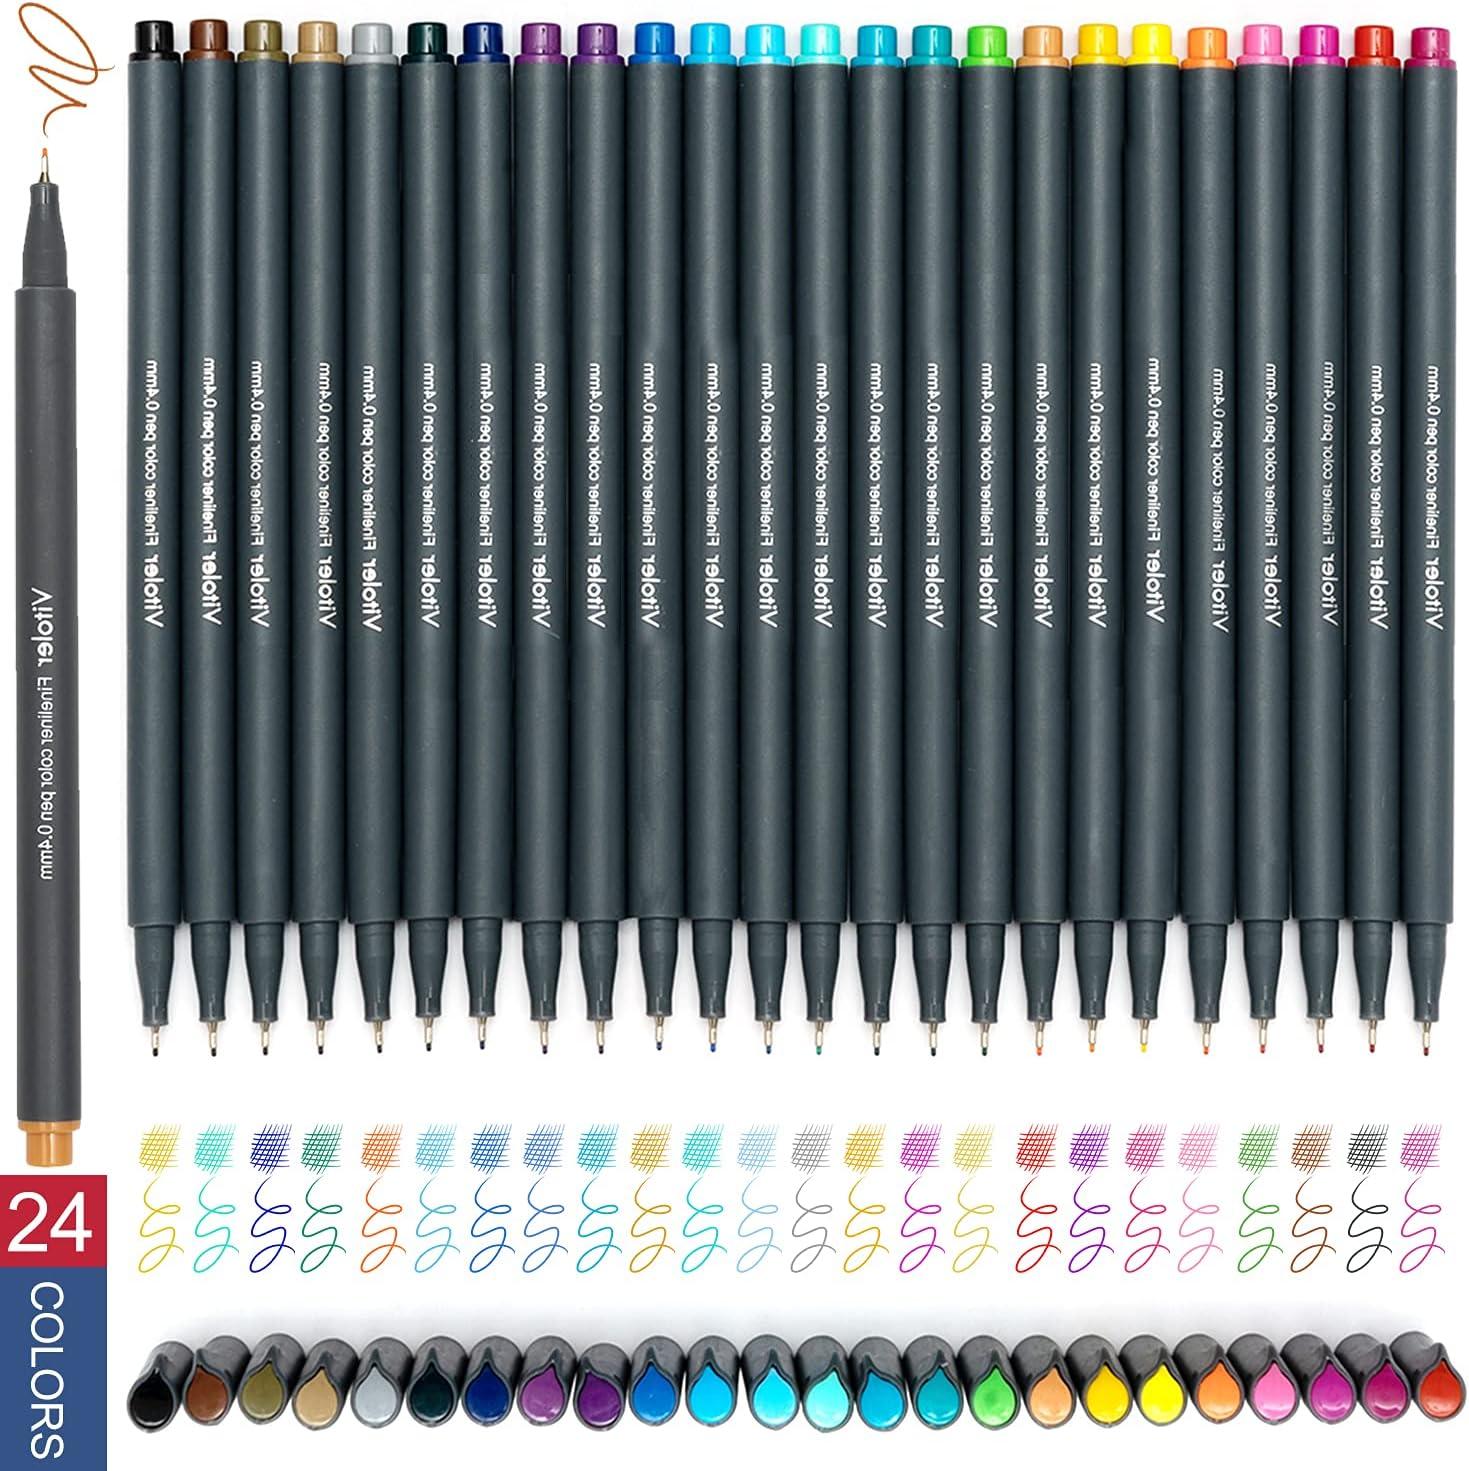 Vanstek 46 Pack Journal Planner Colored Pens, Fineliner Pens for Journaling, Writing Coloring Drawing, Note Taking, Calendar, Planner, Art Office